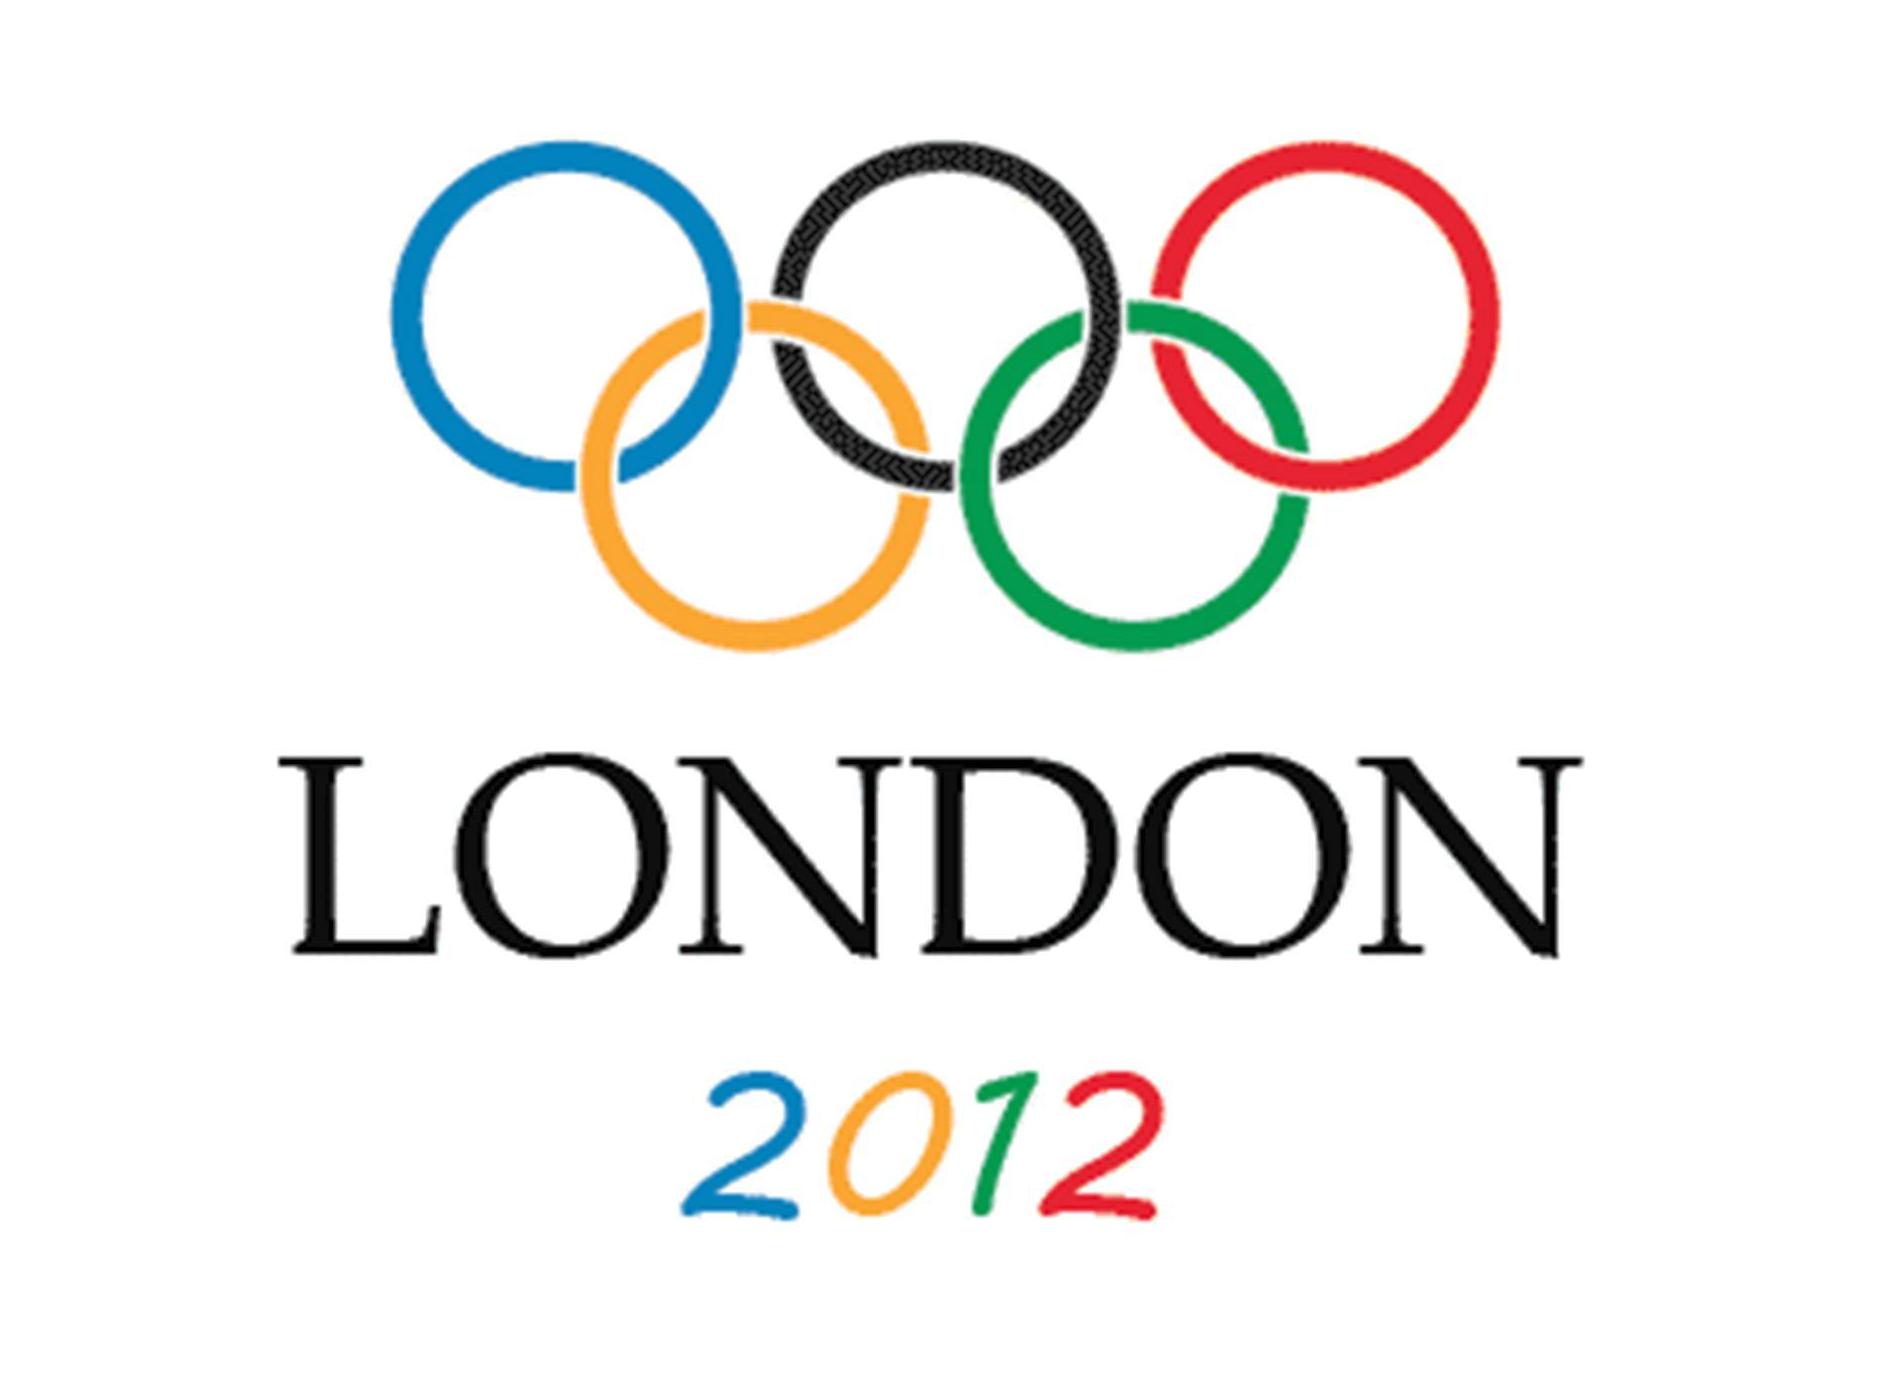 London olympics logo free image download